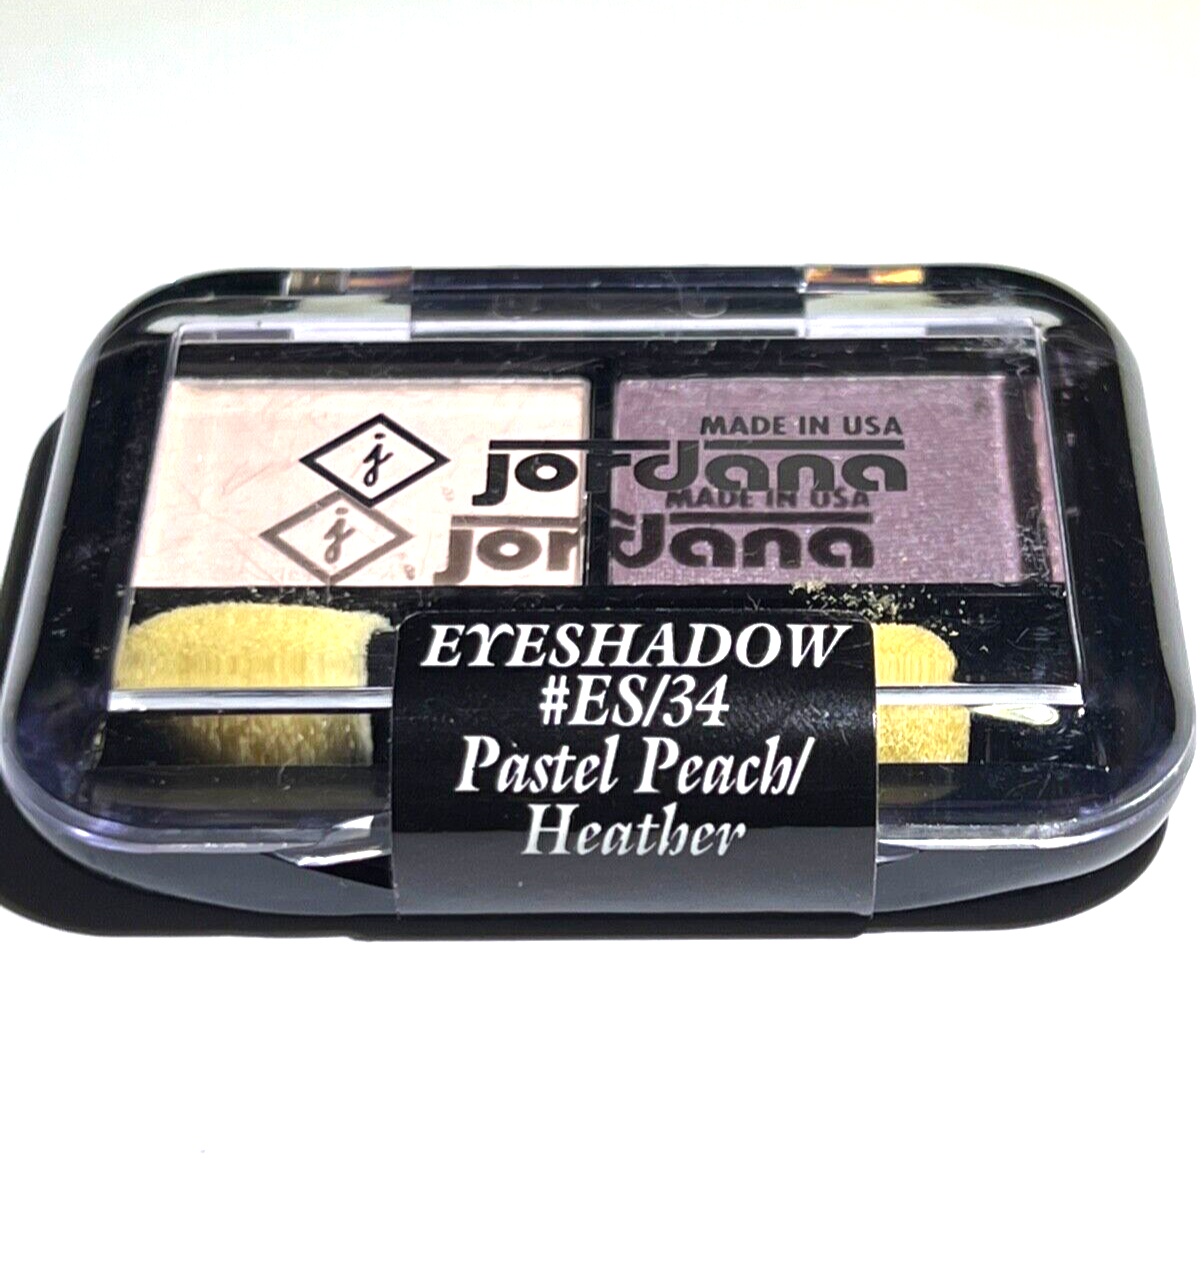 Jordana Eyeshadow #ES/34 Pastel Peach